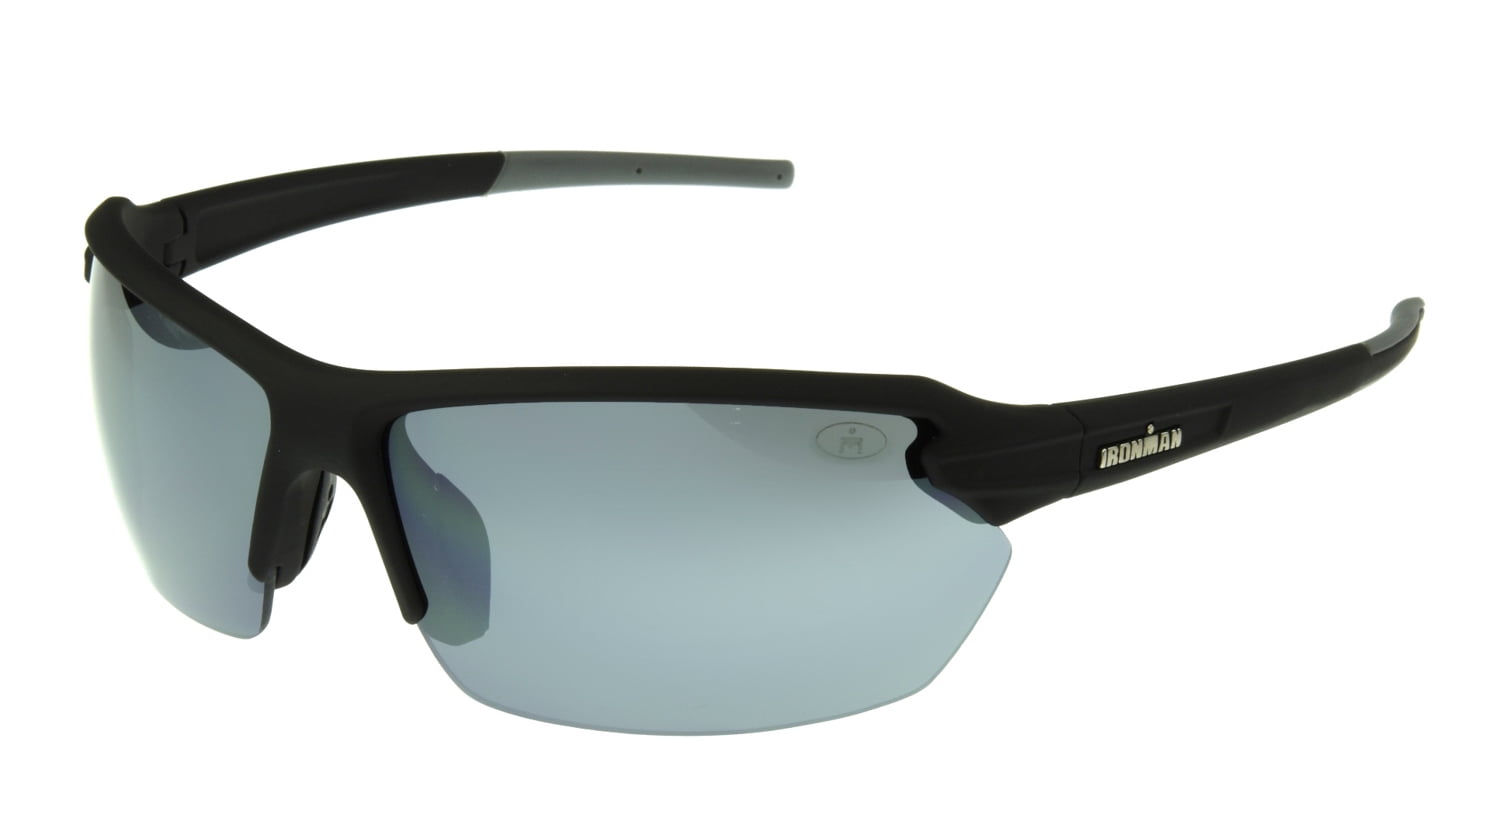 IRONMAN Men's Black Blade Sunglasses PP11 - Walmart.com